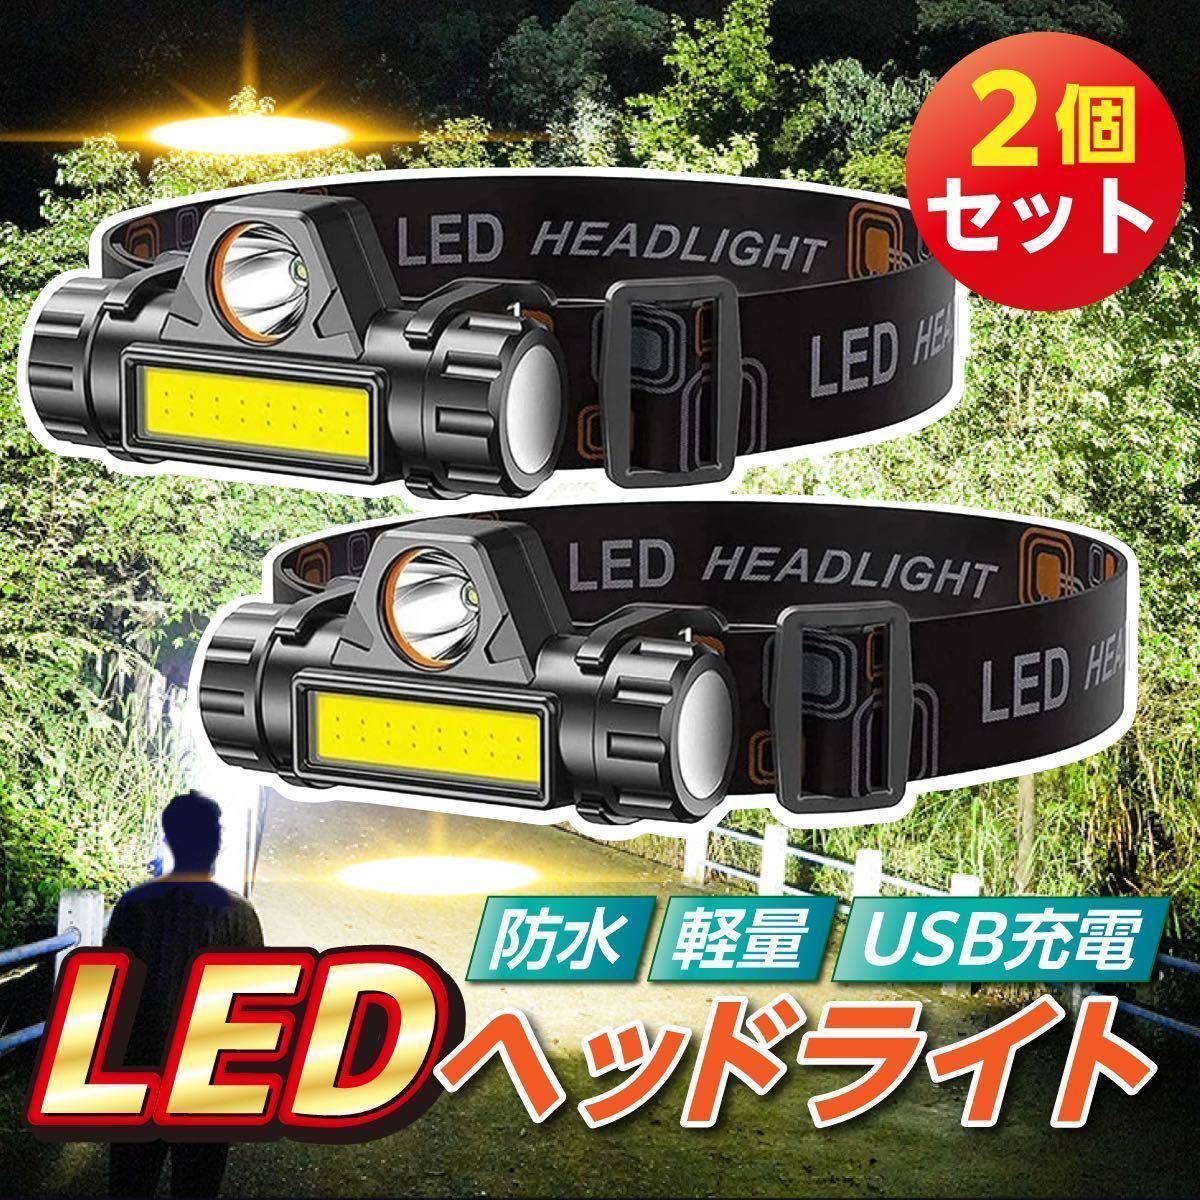 LED ヘッドライト 2個 USB アウトドア 防水 小型 ランニング 登山 キャンプ LED 夜 防災 高輝度 ヘルメット 充電 USB 作業灯_画像1